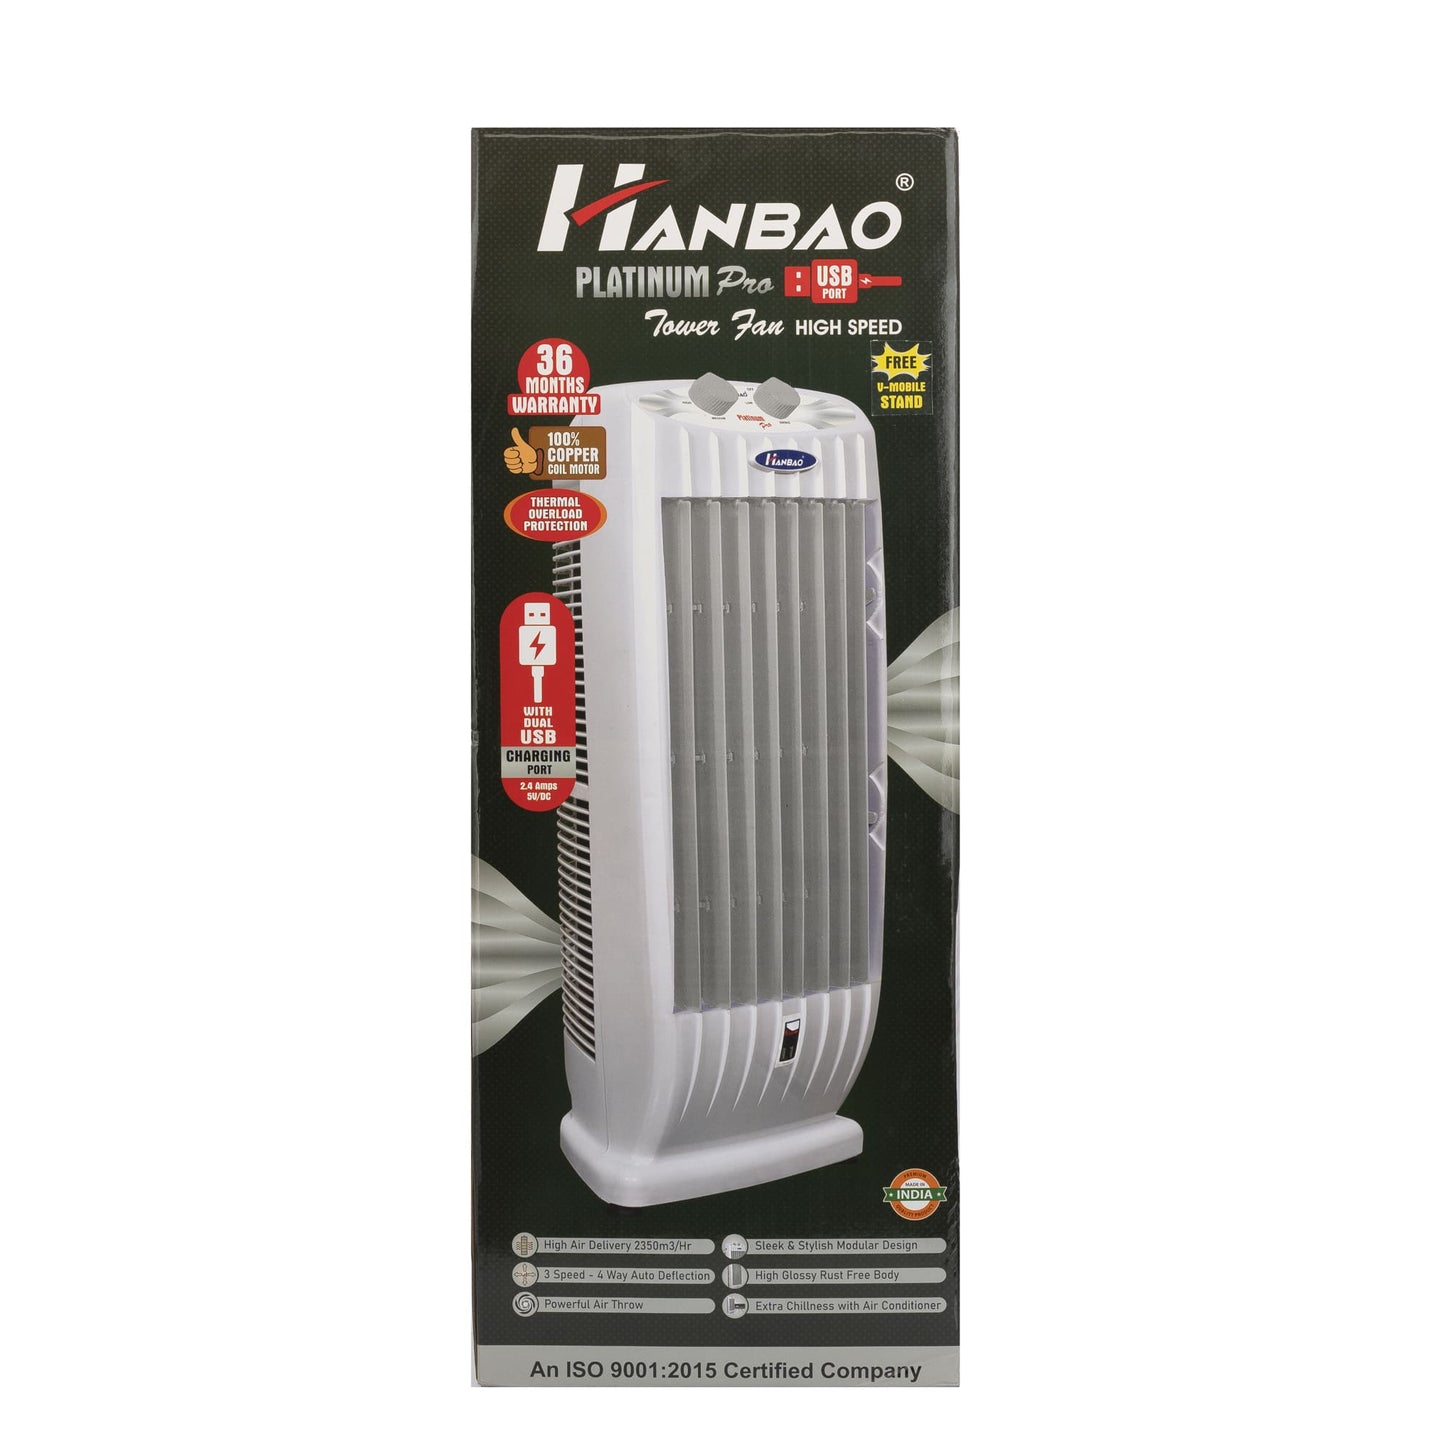 Hanbao USB Tower Fan- Platinum Pro, 36 months Warranty ( FREE - 1 Folding Stool)